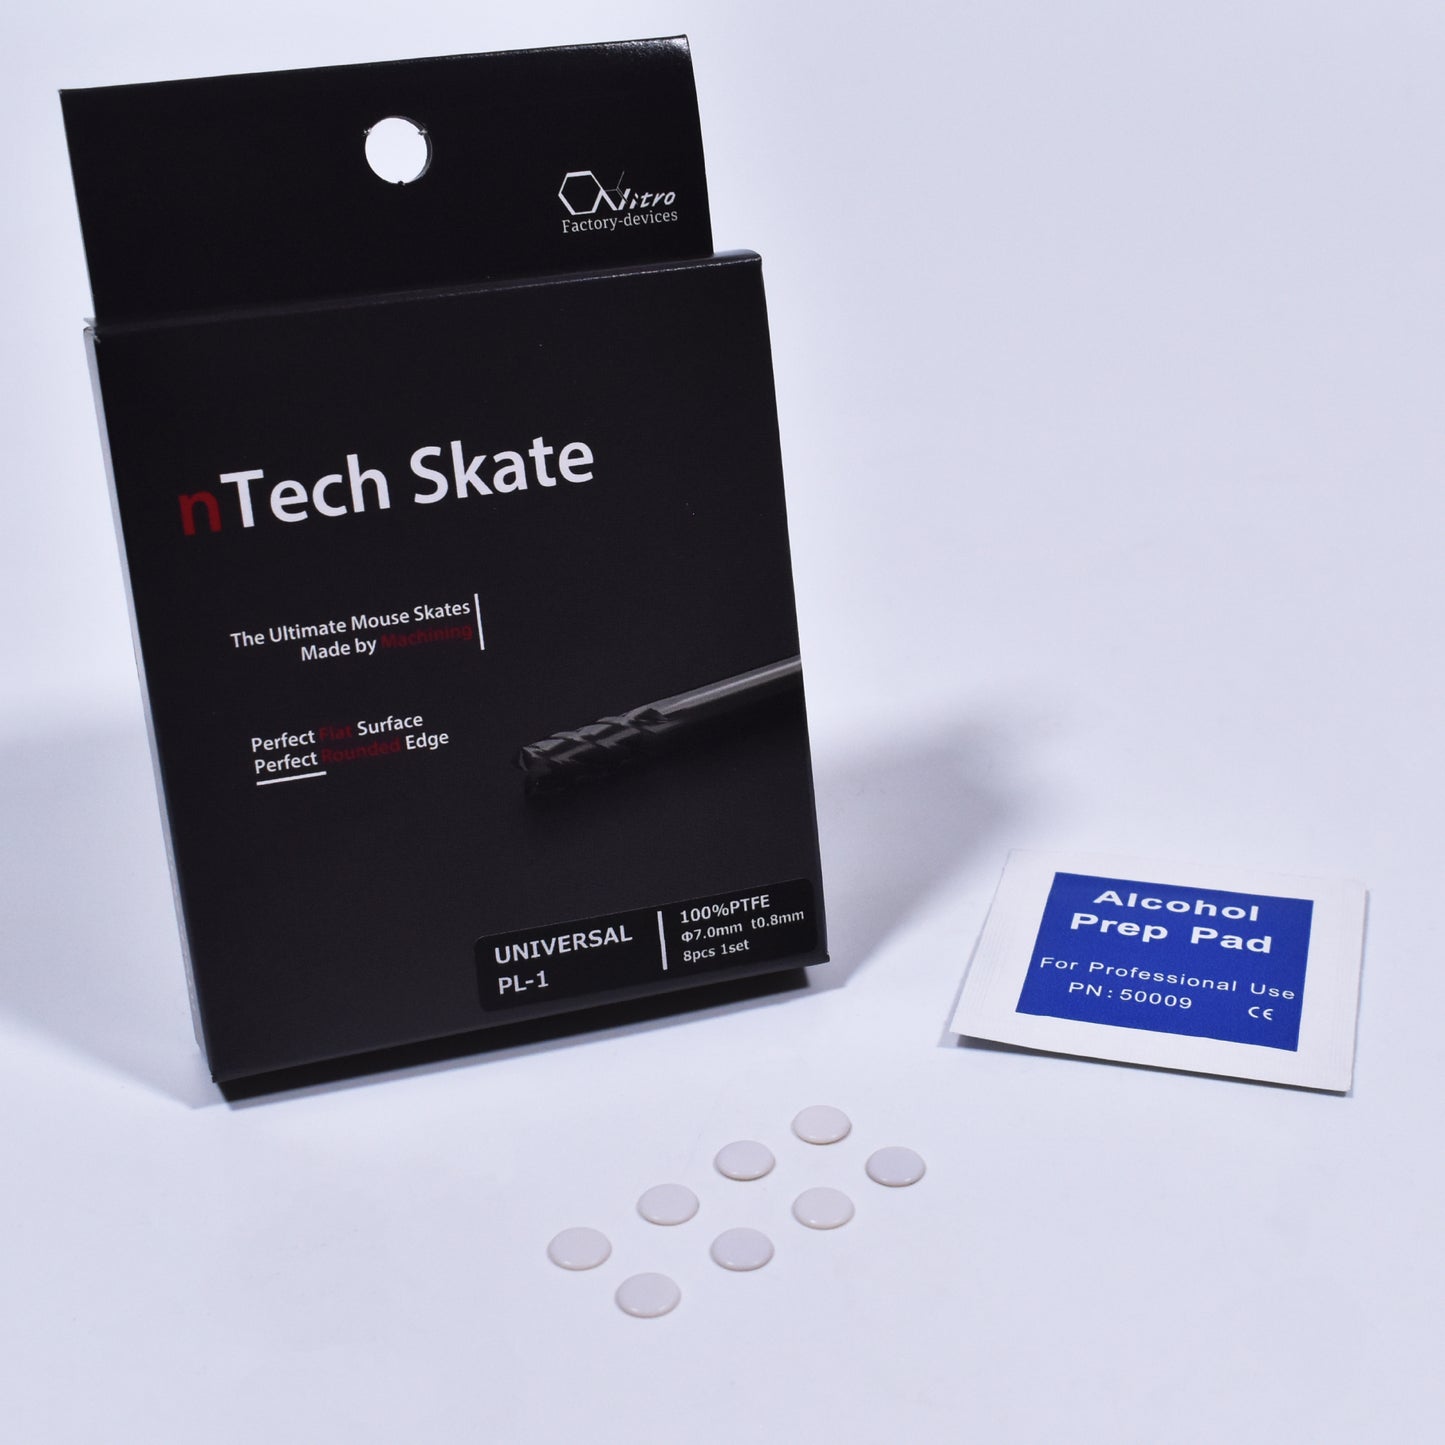 nTech Skate for Universal PL-1 DR-1 ×1set 8個入 [汎用丸型/直径7.0mm] 100%PTFE ジュラコン®素材